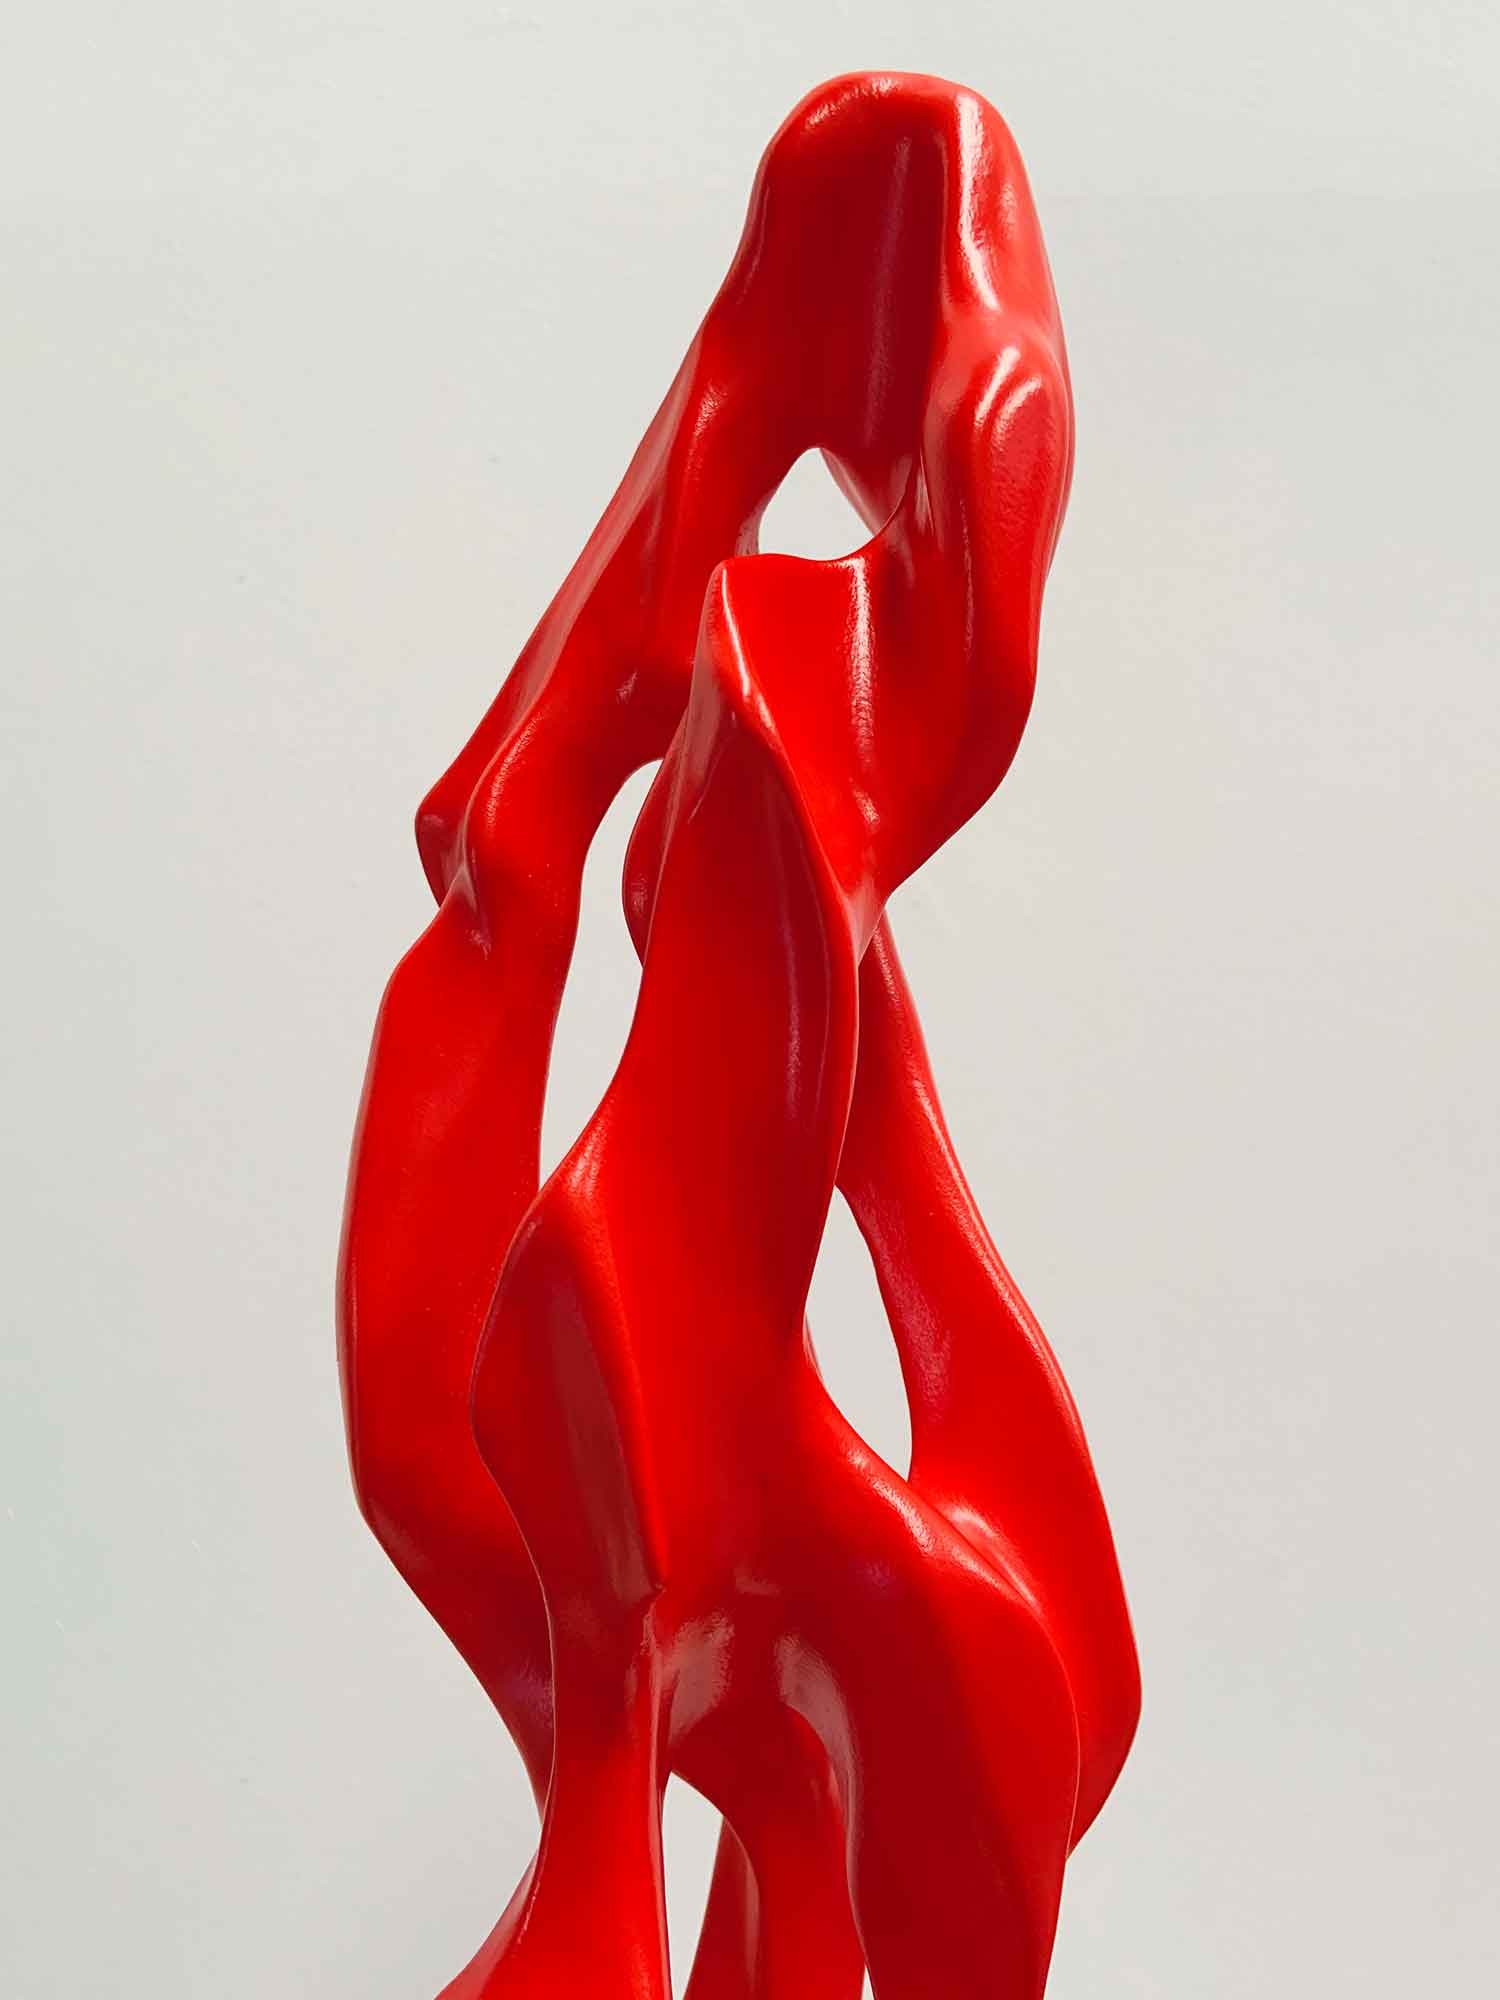 Escultura roja de formas orgánicas